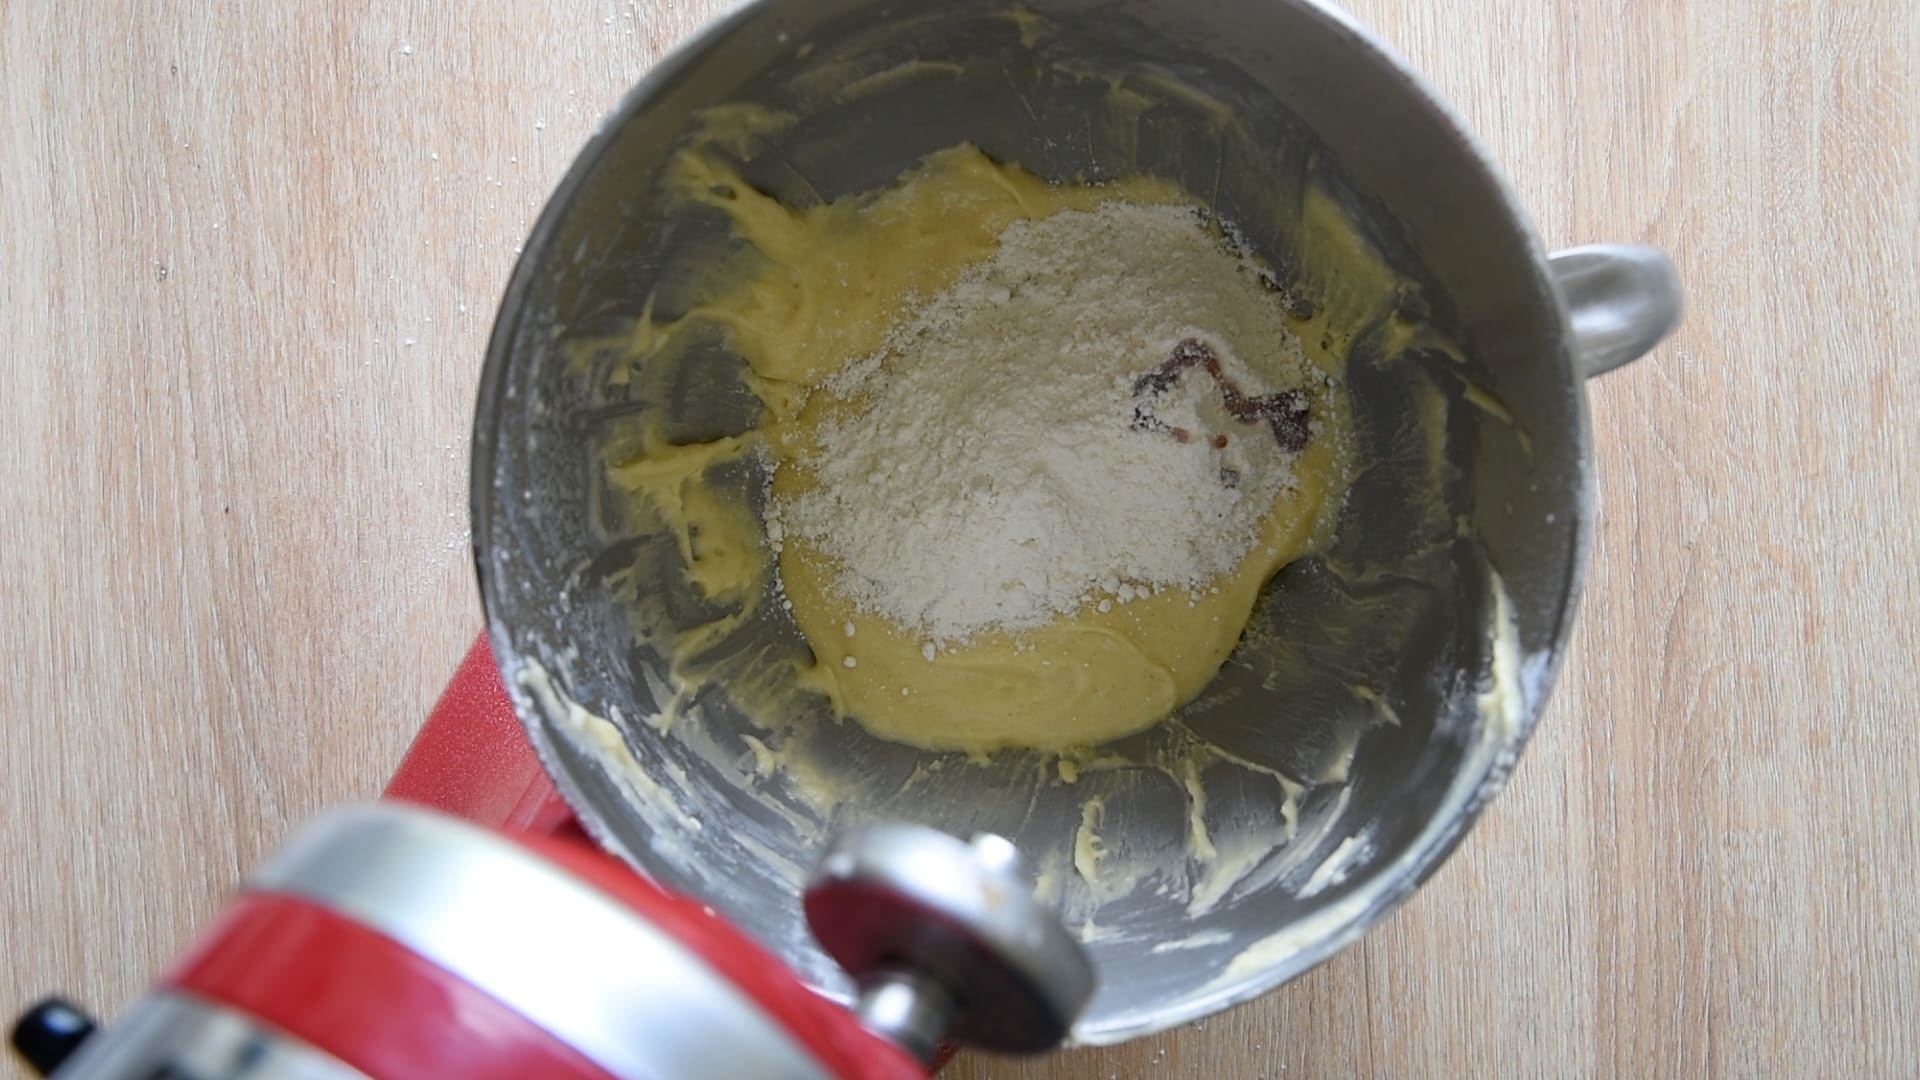 Adding flour and vanilla to make the vanilla batter